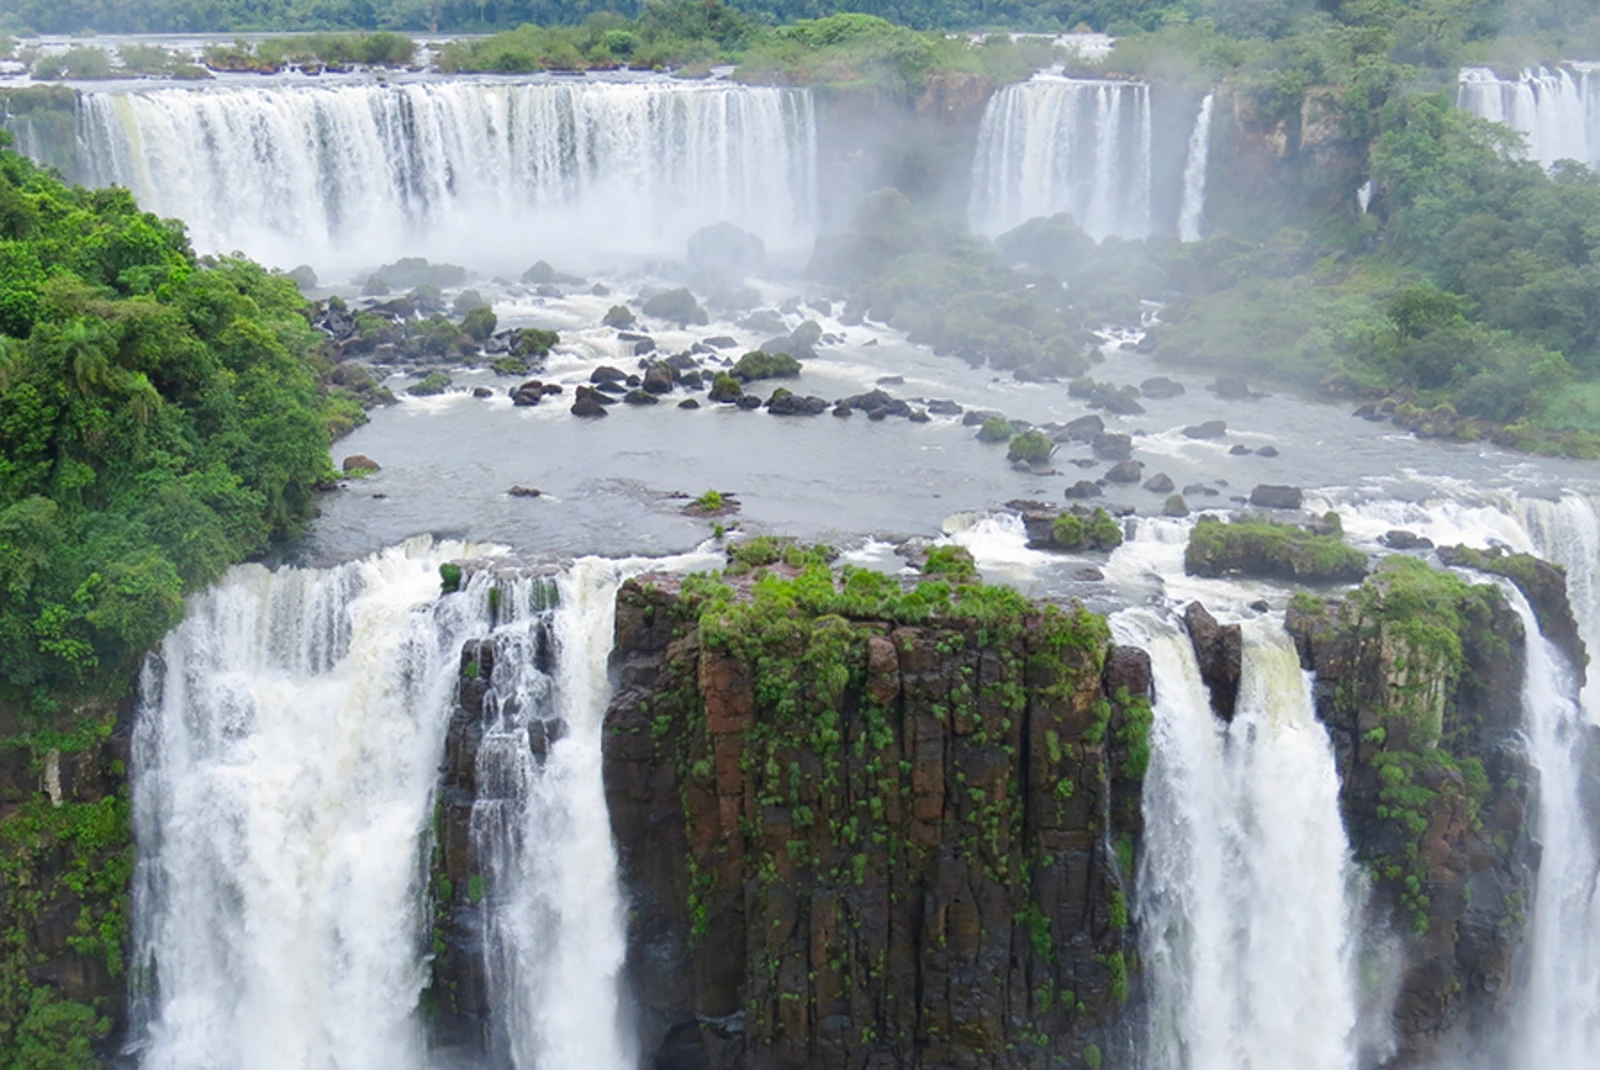 An Adventurer’s 8-Day Guide to Argentina - Day 5: Brazilian Iguazu Falls